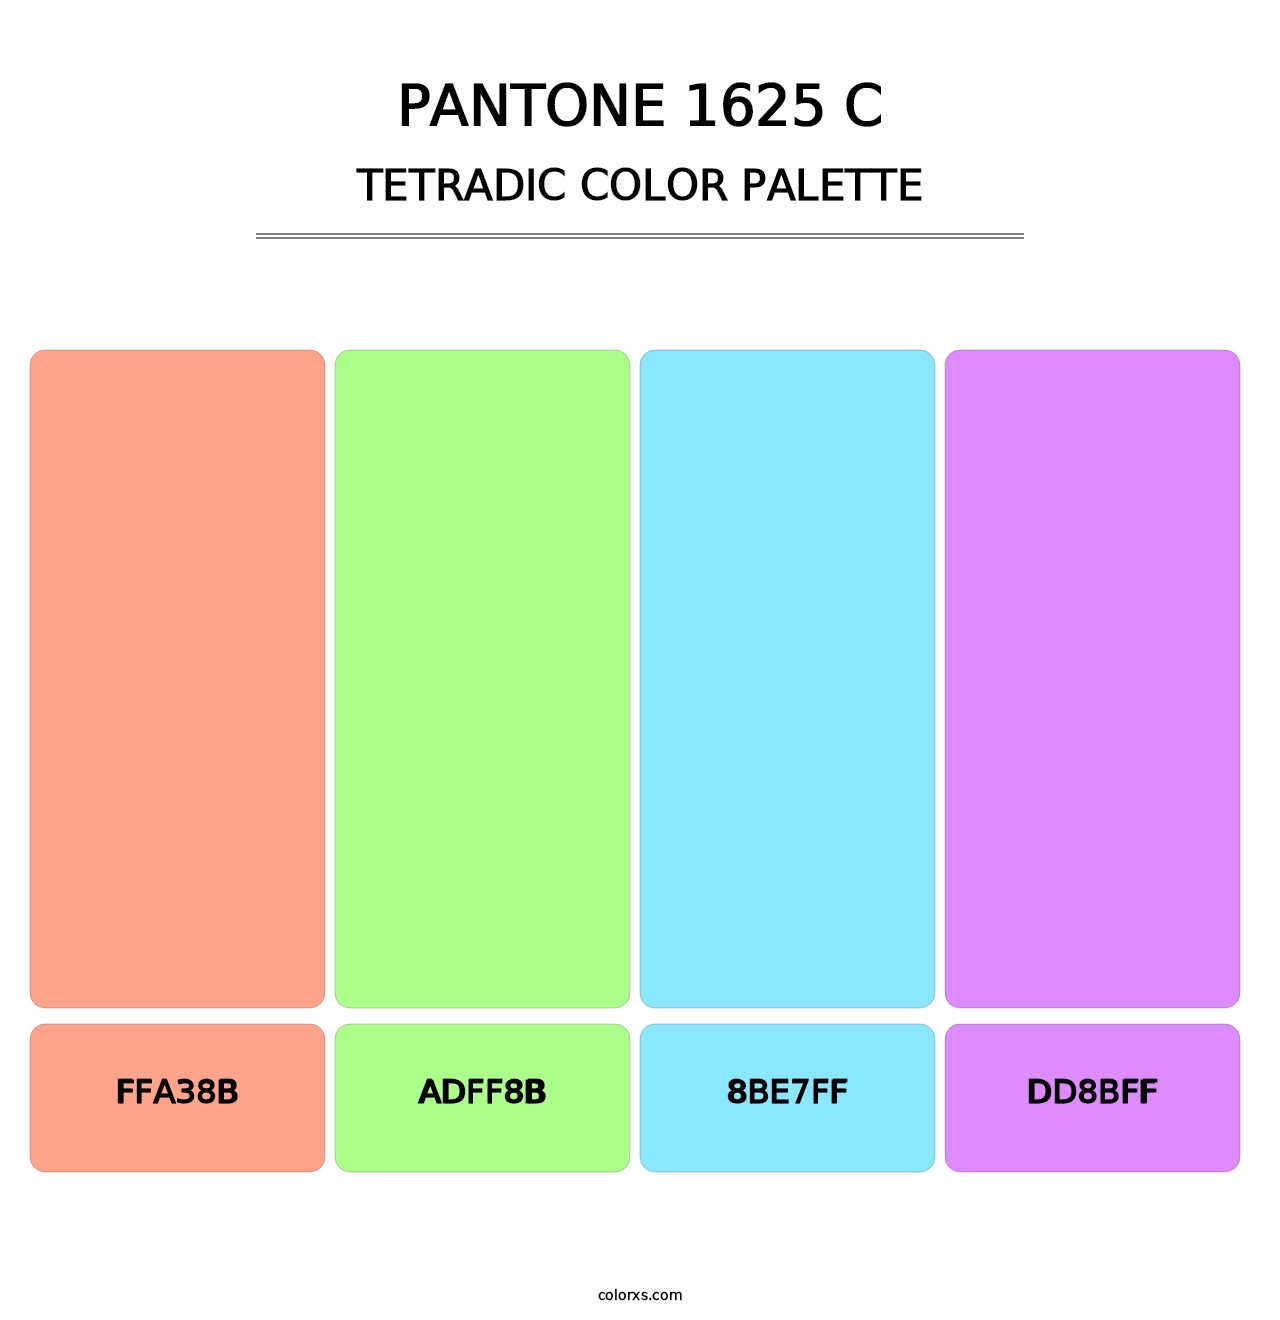 PANTONE 1625 C - Tetradic Color Palette